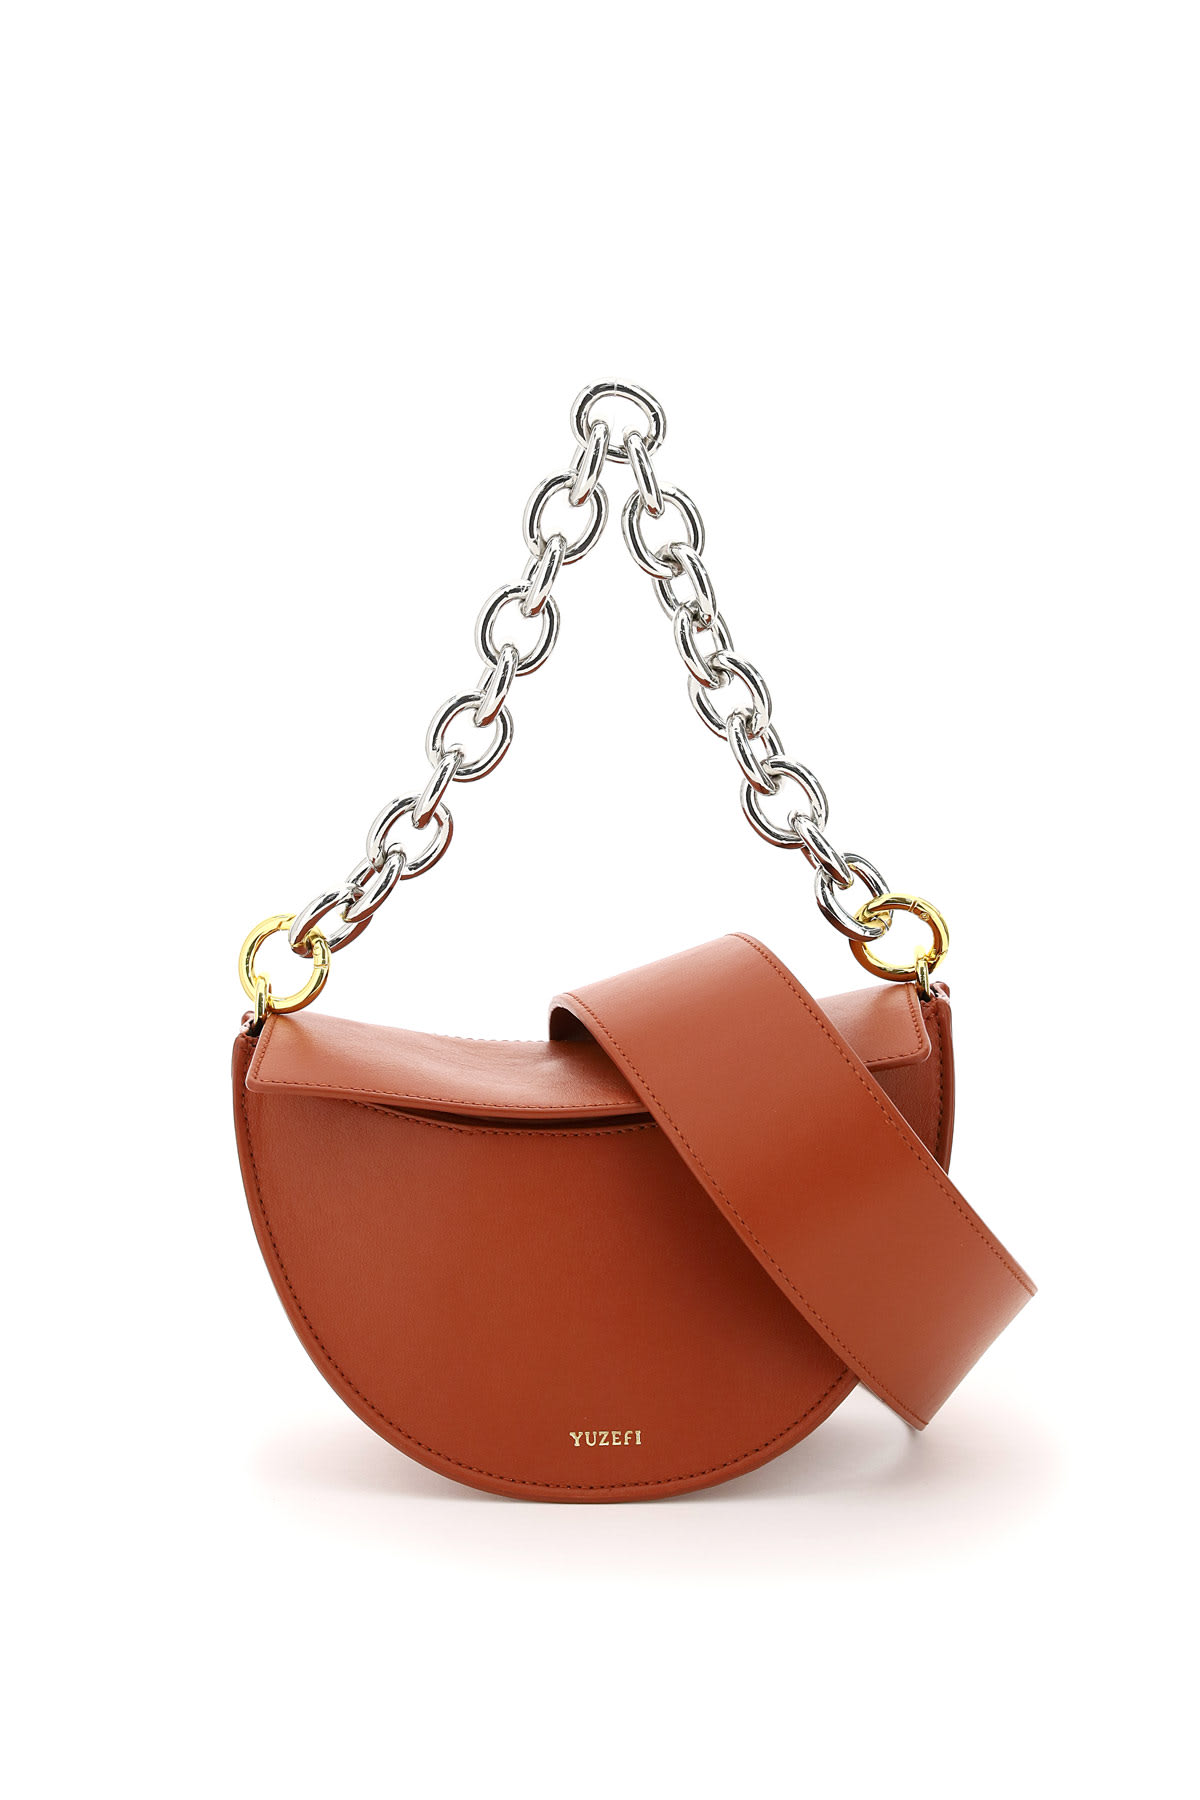 YUZEFI Doris Bag With Chain